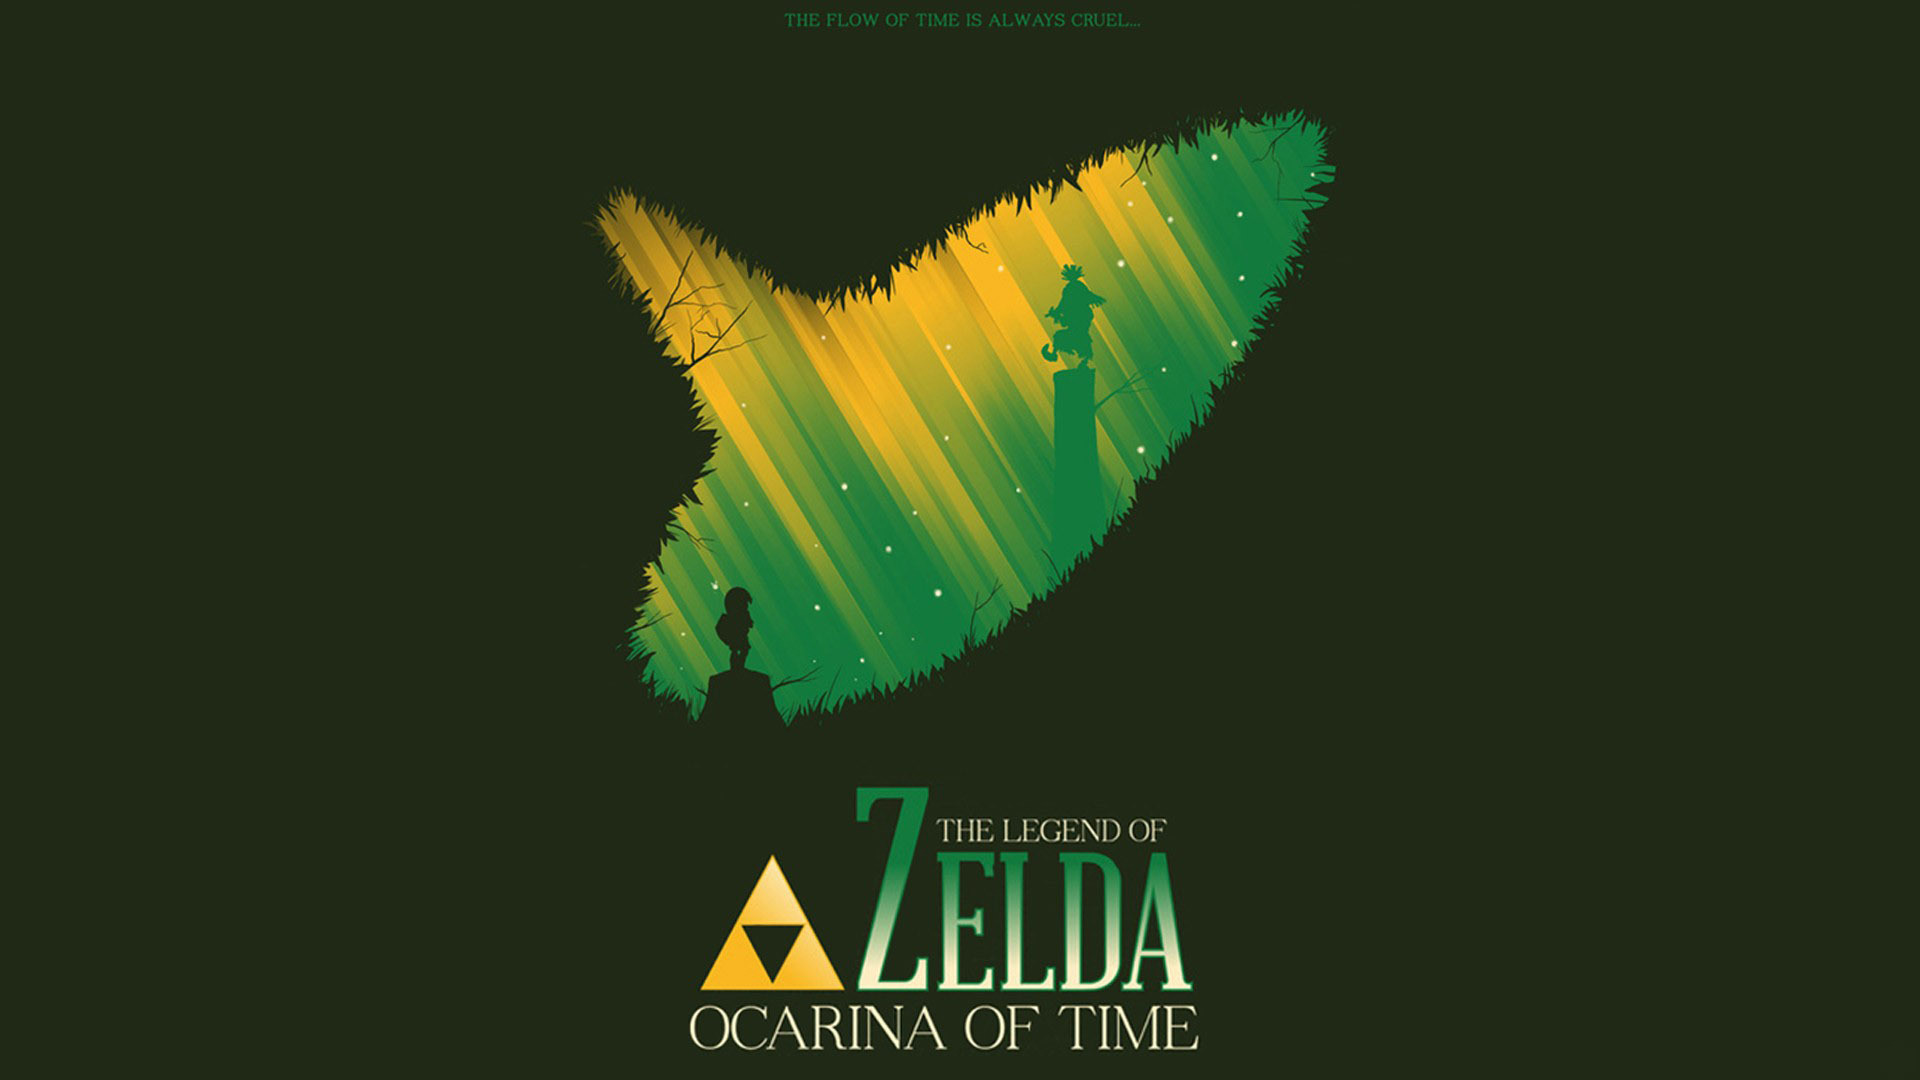 The Legend of Zelda   Ocarina of Time wallpaper 14825